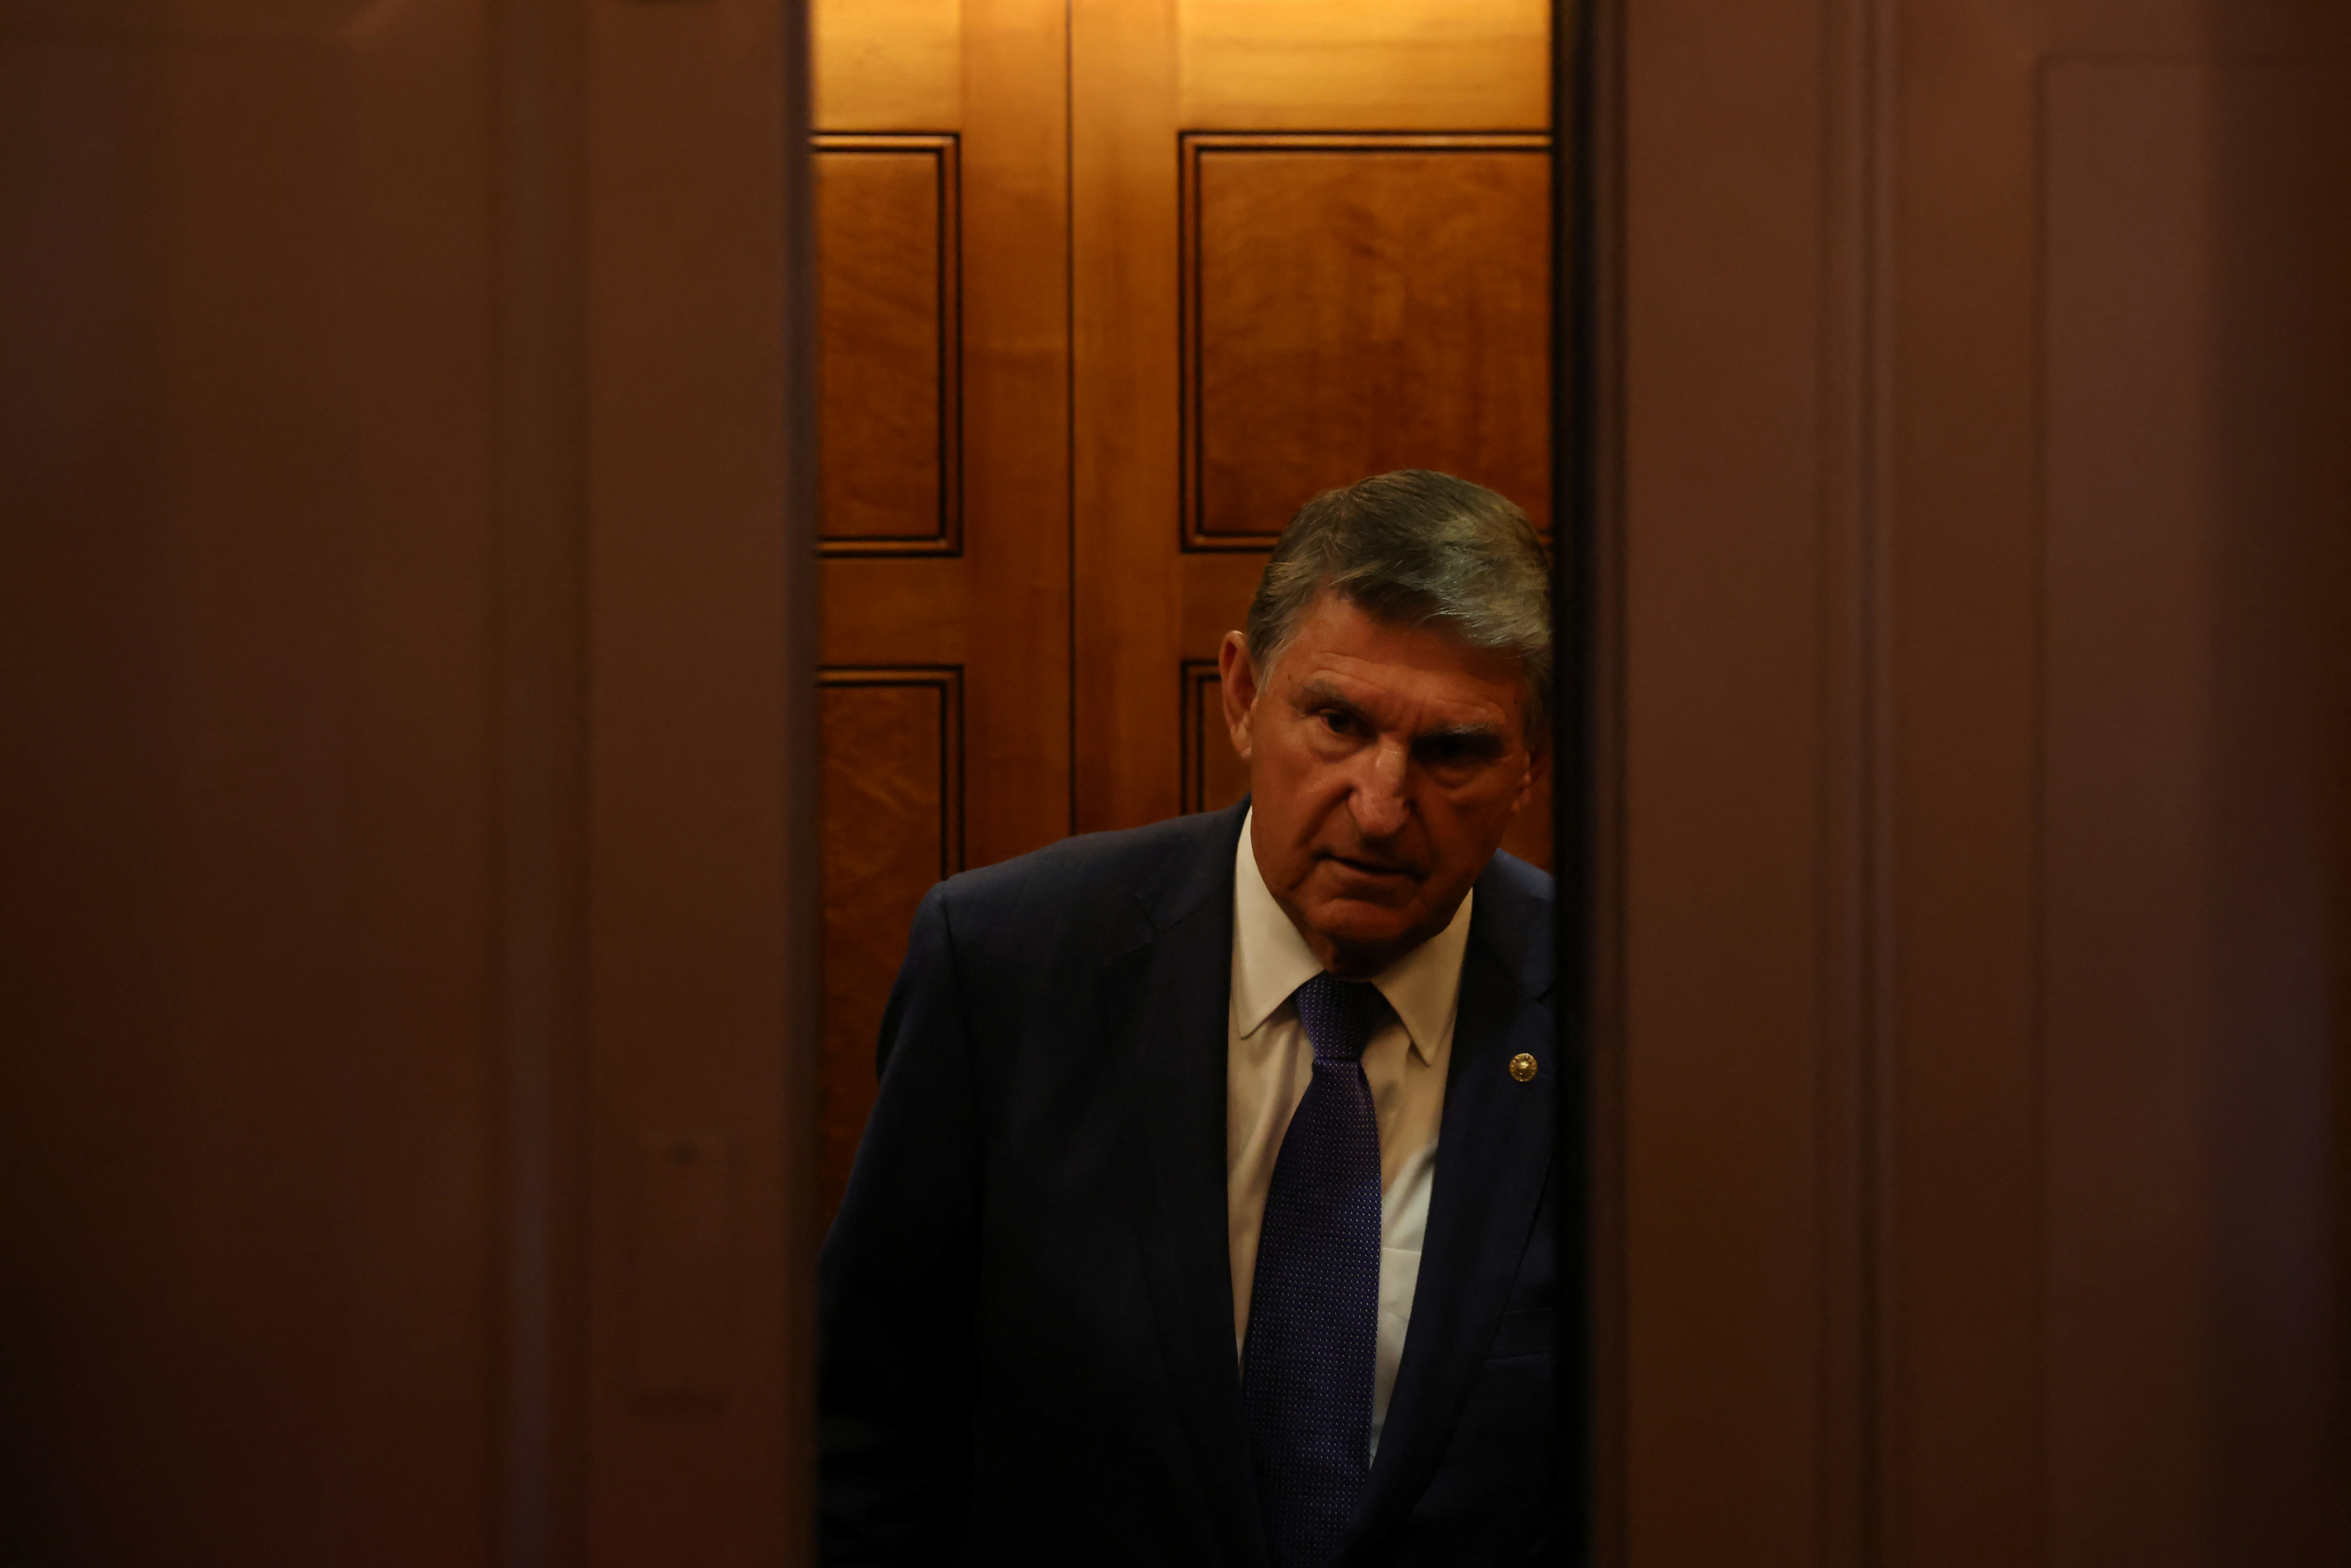 U.S. Senator Joe Manchin leaves the Senate floor in Washington